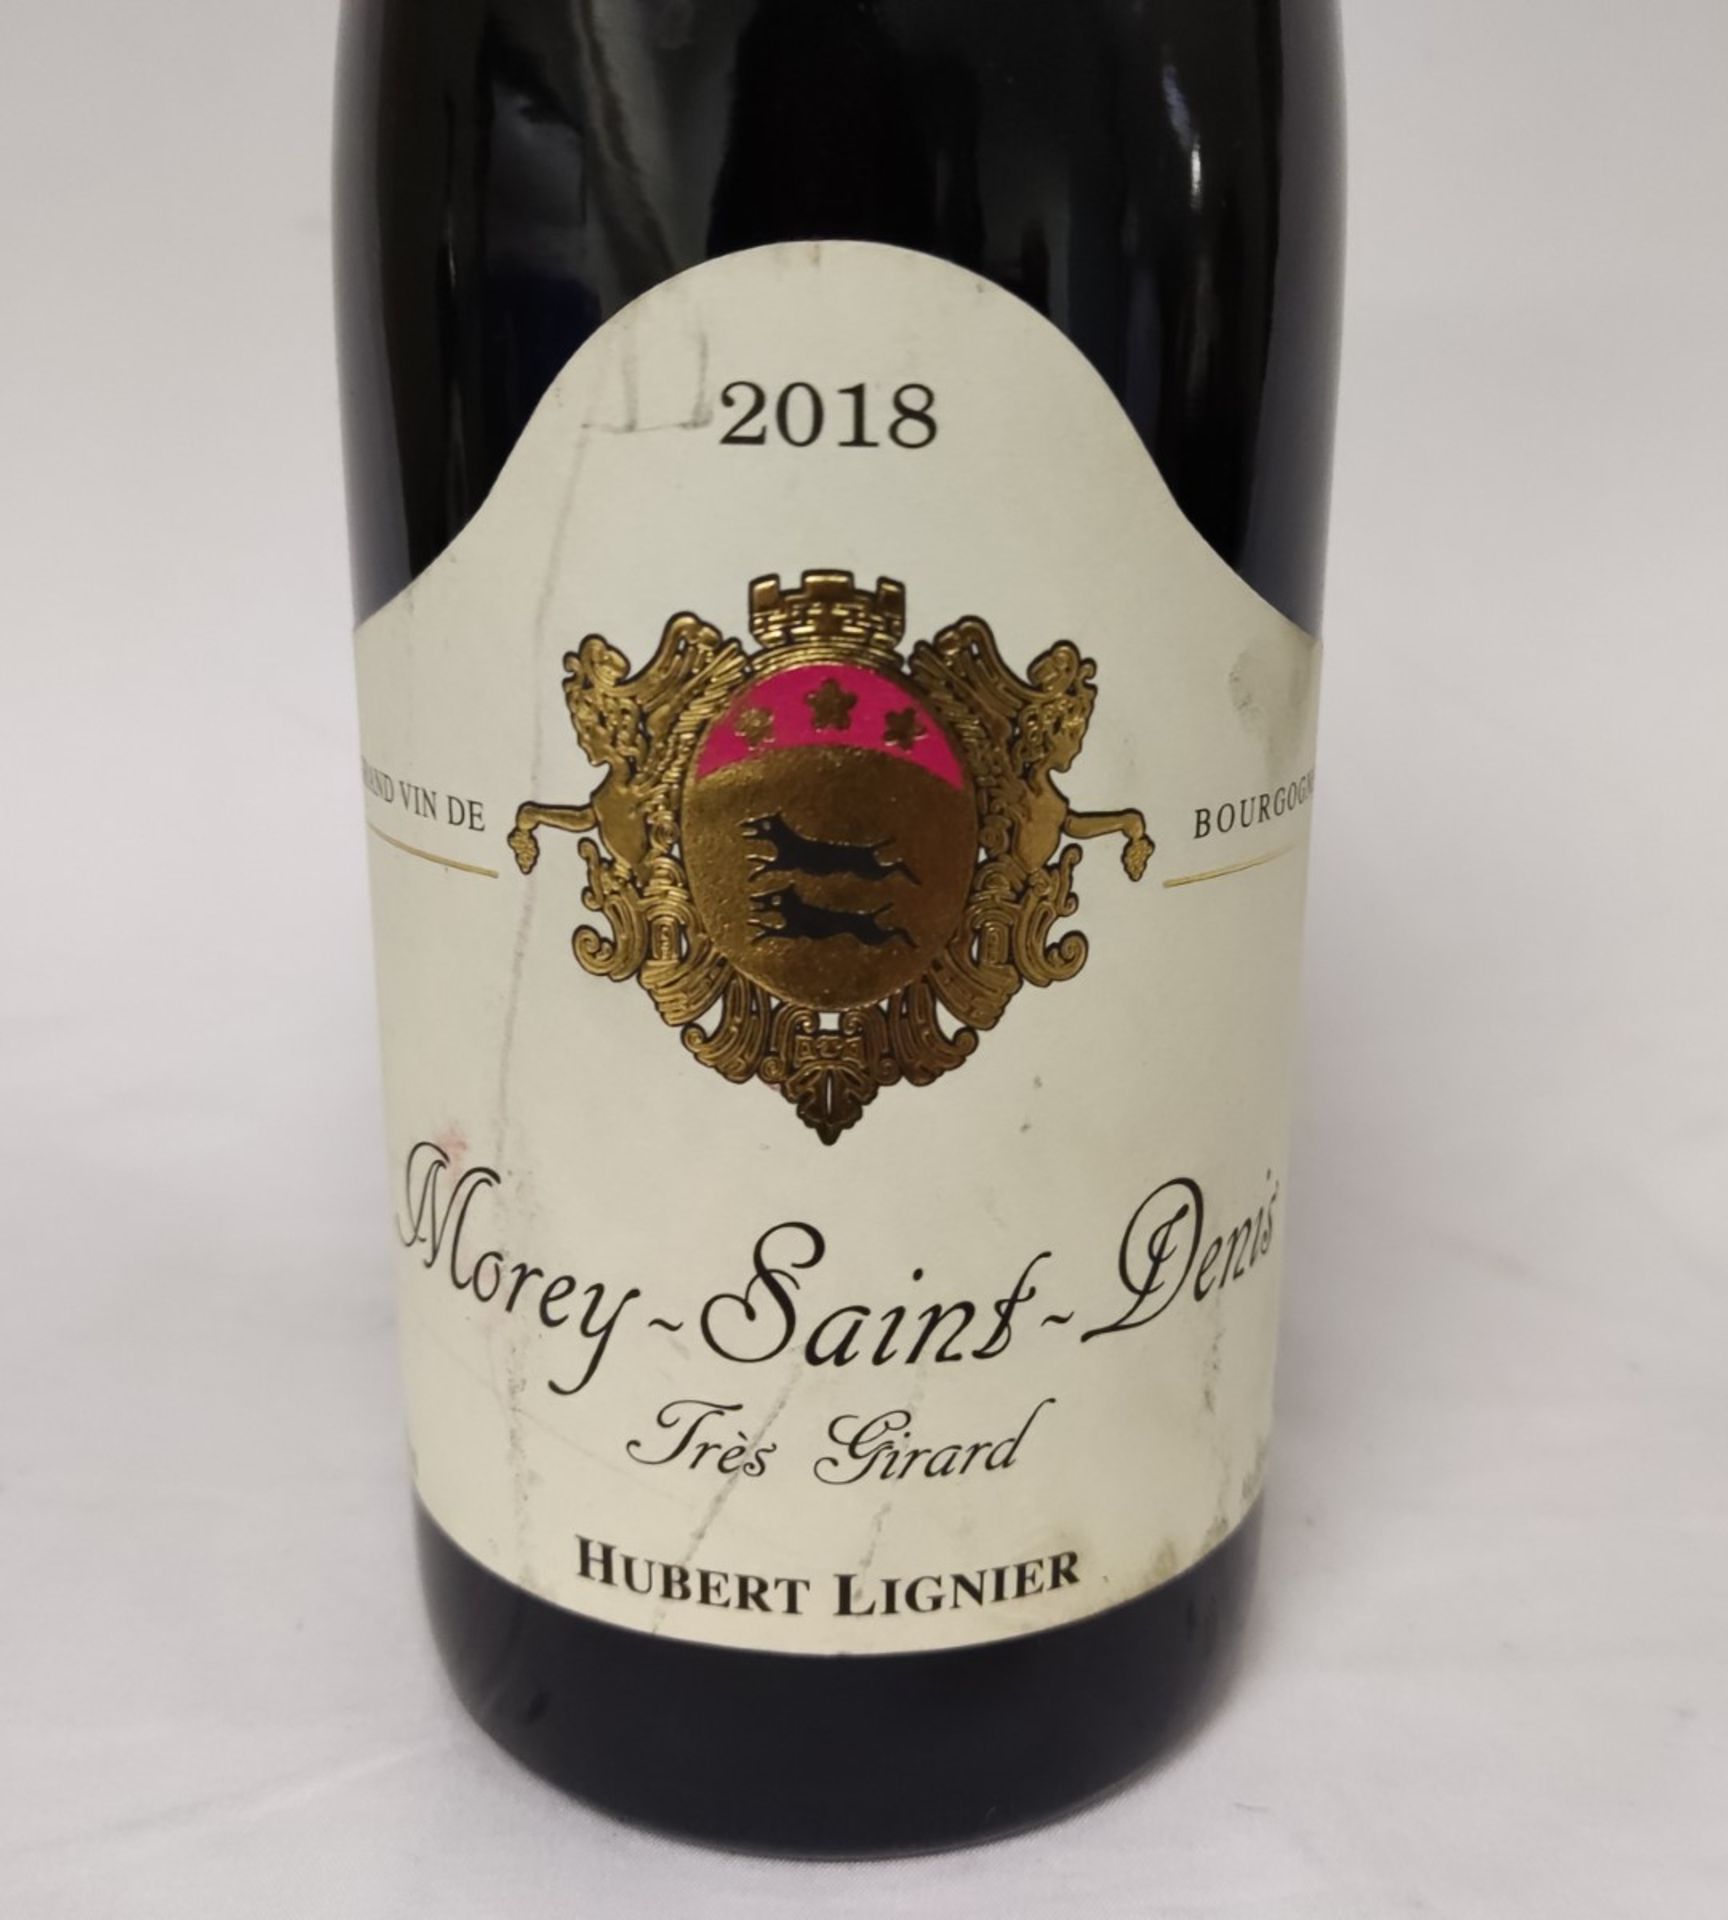 1 x Bottle of 2017 Domaine Hubert Lignier Morey-Saint-Denis Tres Girard Red Wine - RRP £60 - Image 3 of 4